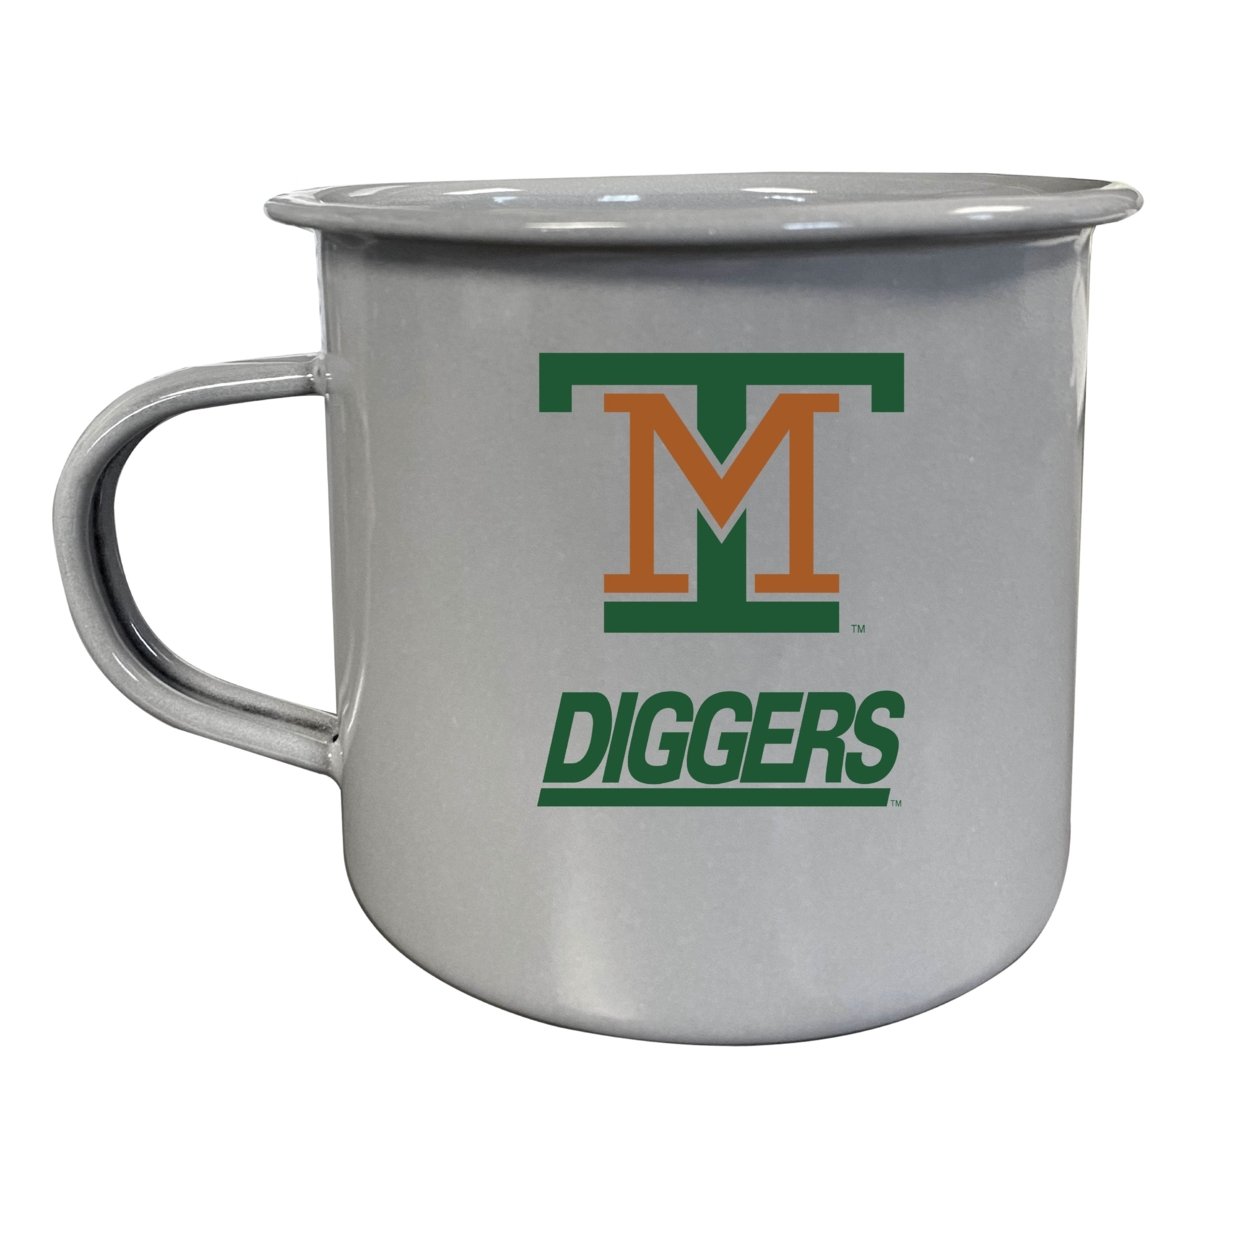 Montana University Tin Camper Coffee Mug - Choose Your Color - Gray